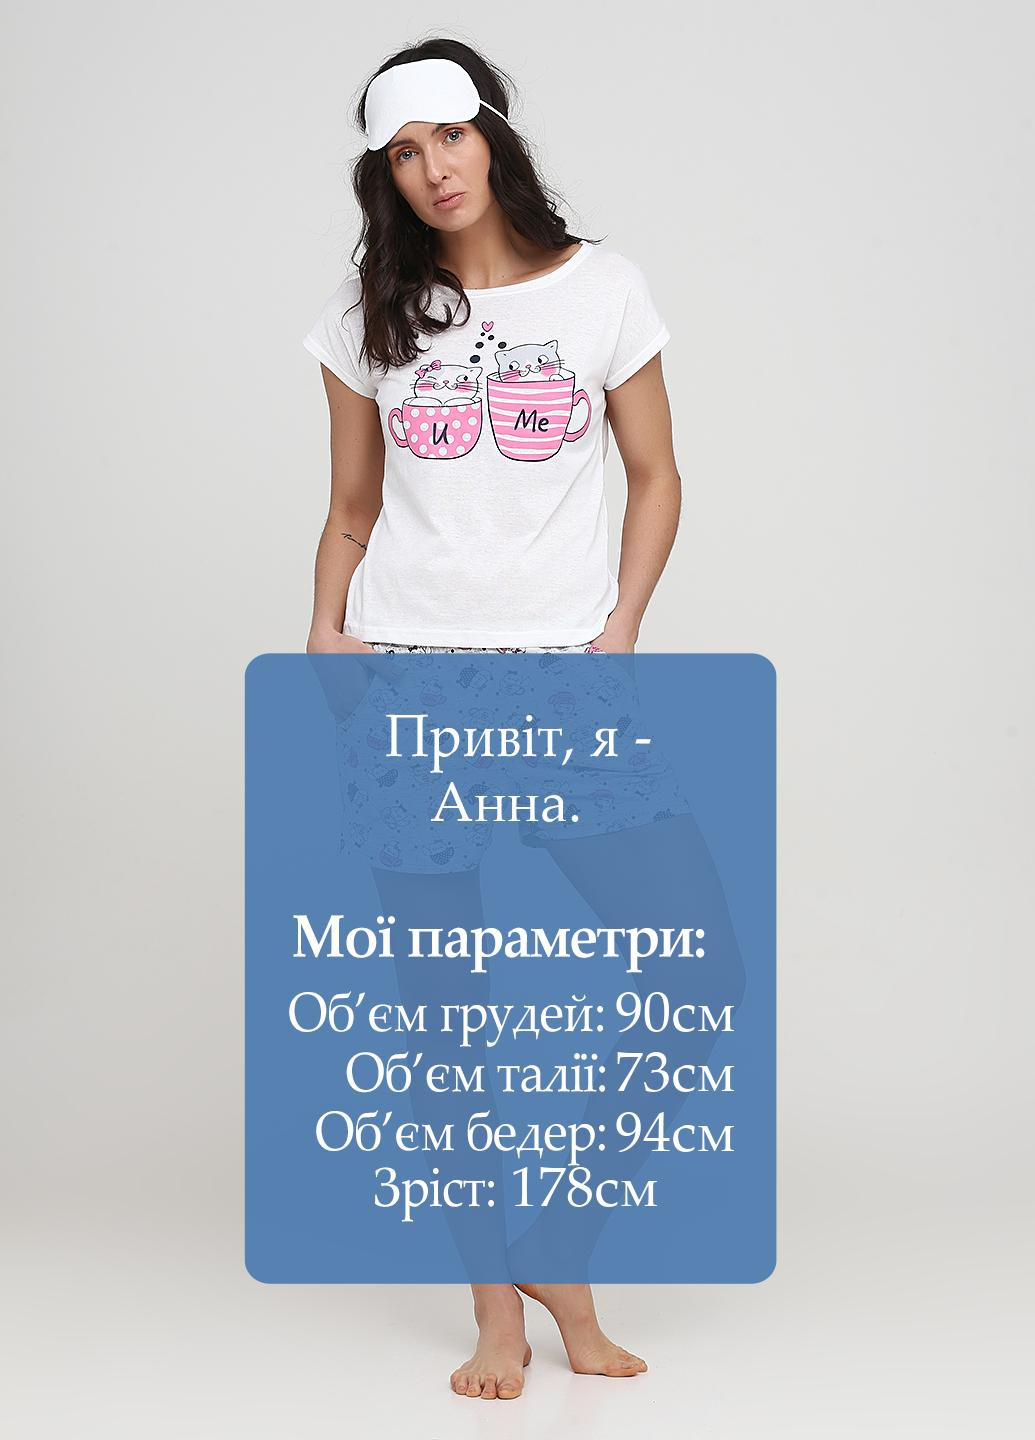 Молочная всесезон пижама (маска для сна, футболка, шорты) футболка + шорты Трикомир